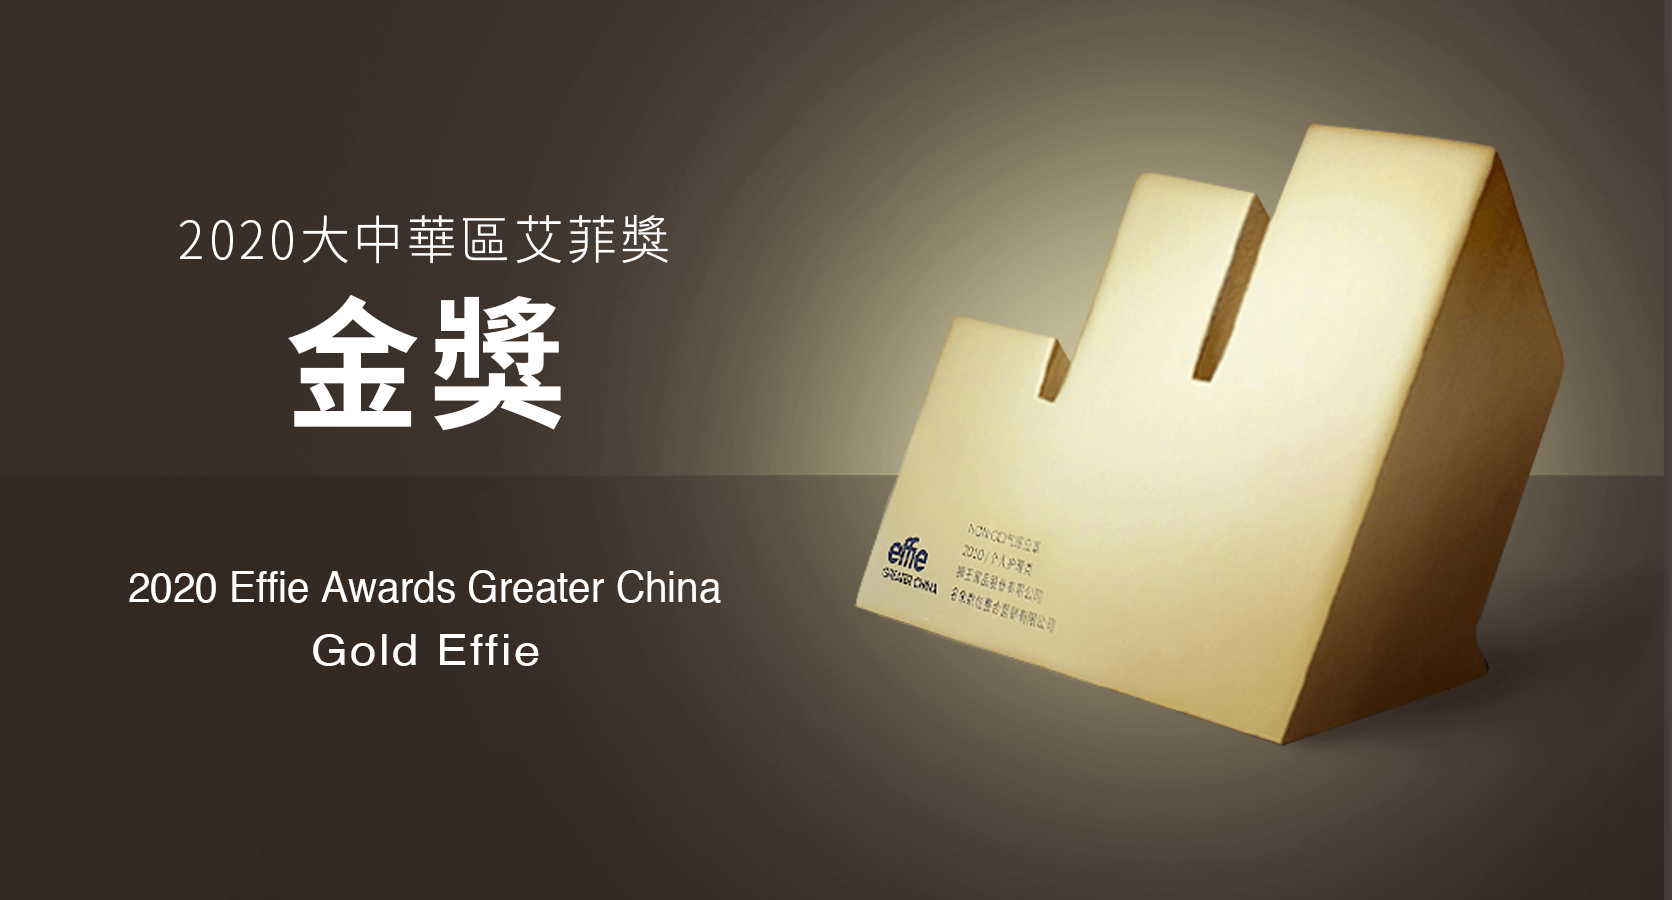 2020 Effie Awards Greater China 大中華區艾菲獎